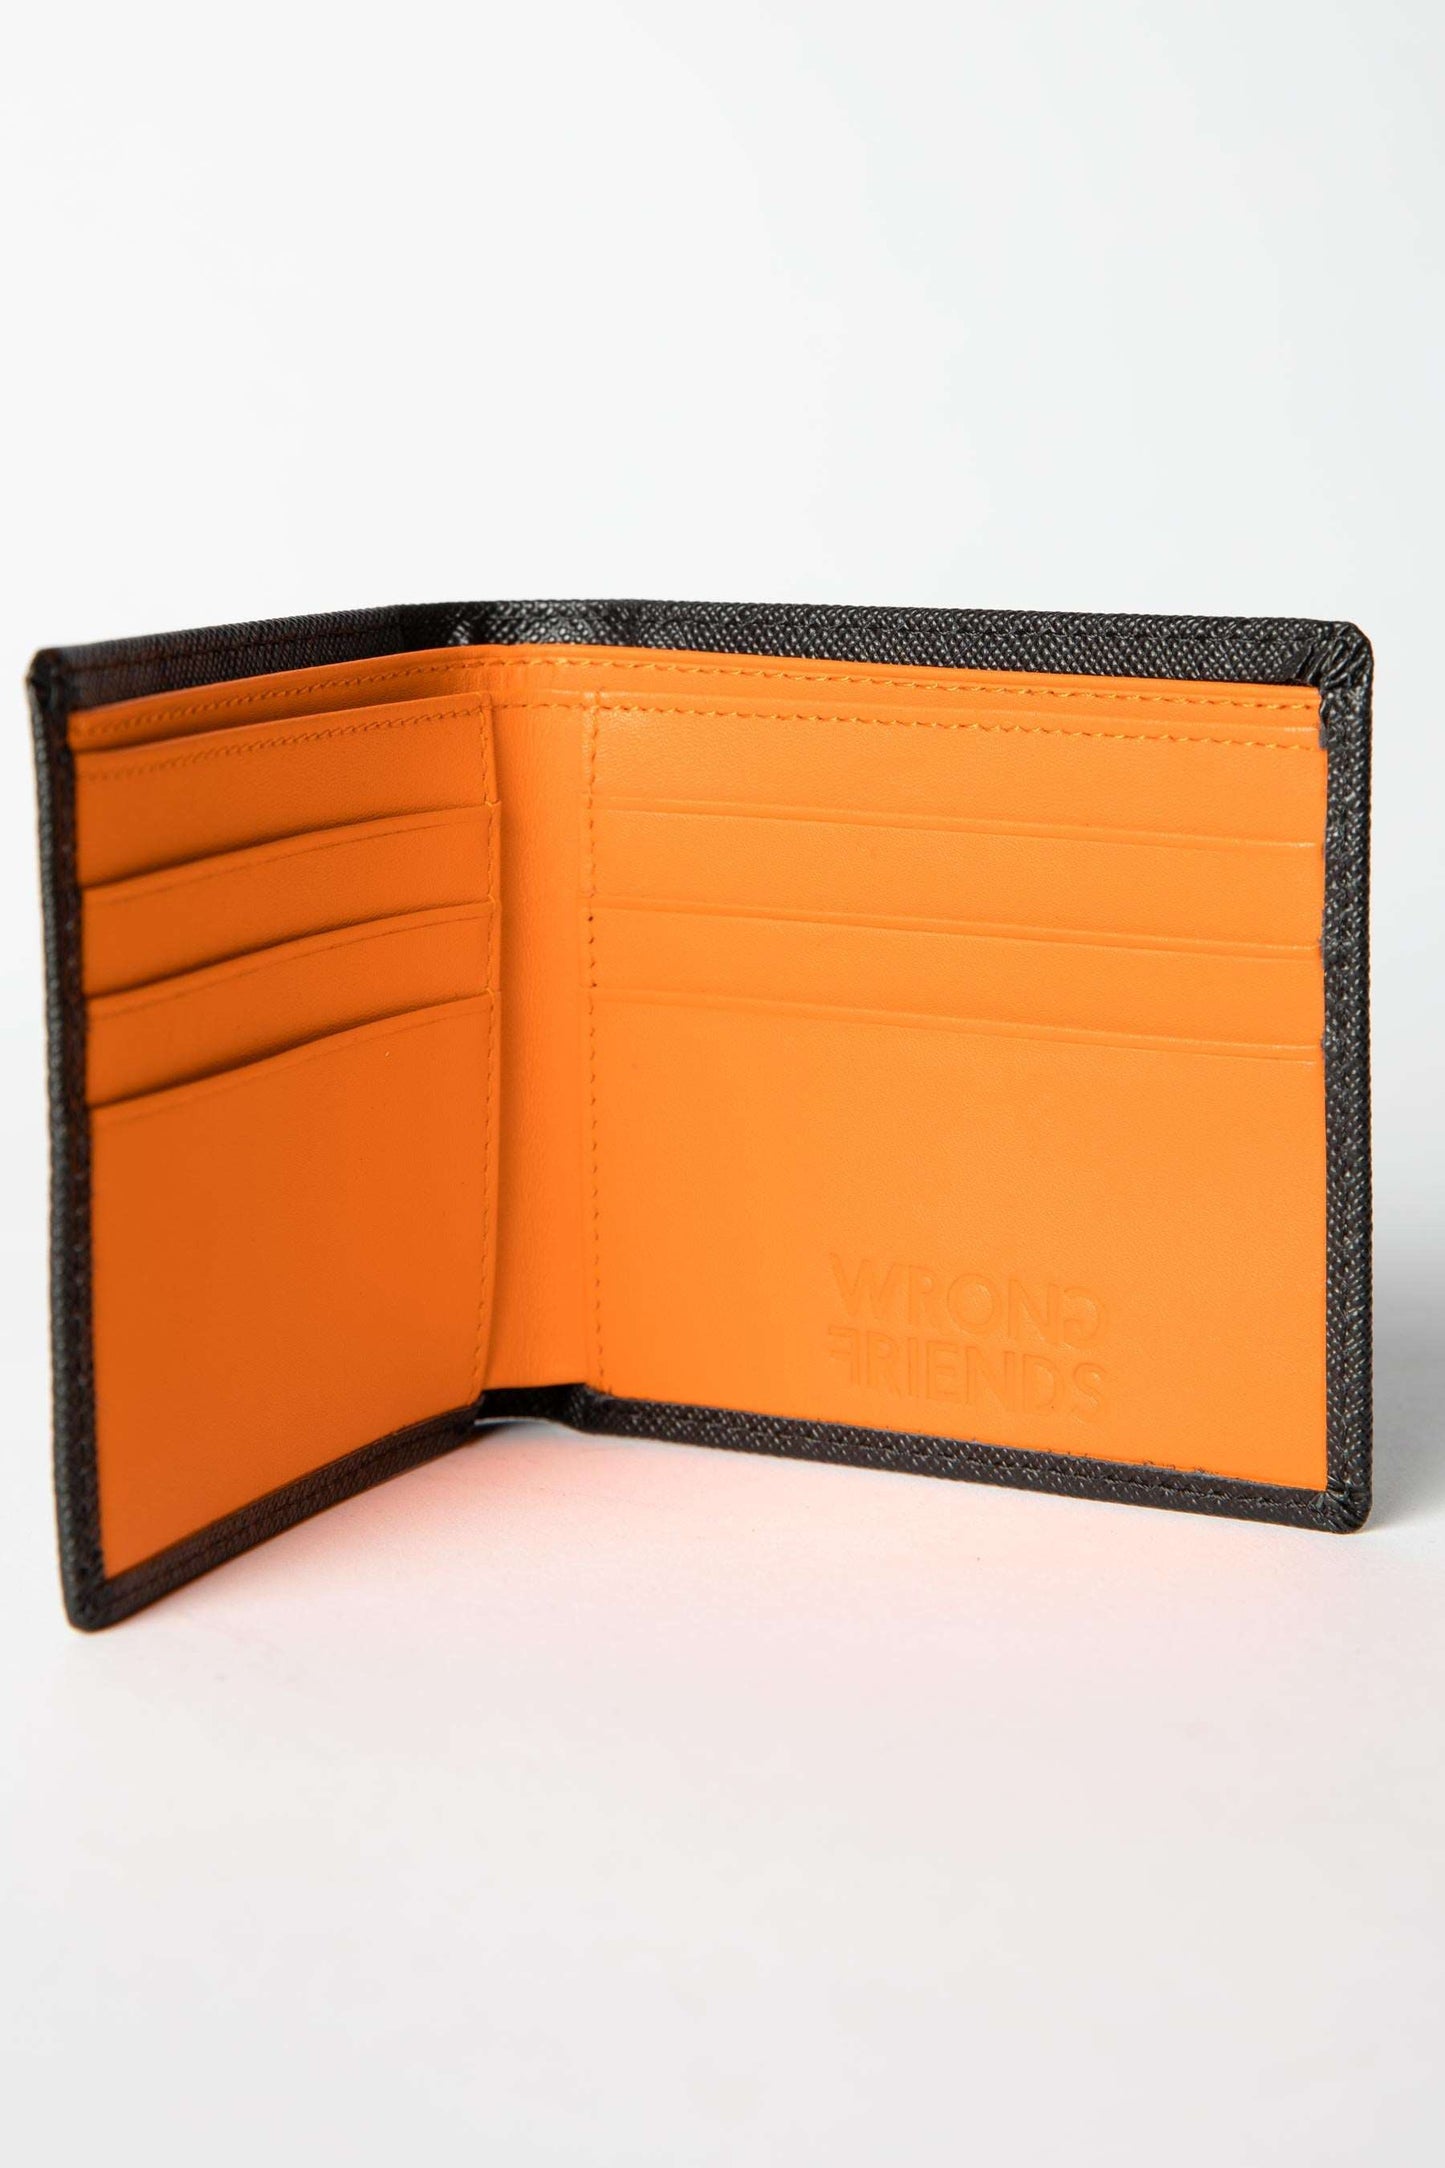 Geneve Wallet Black/Orange